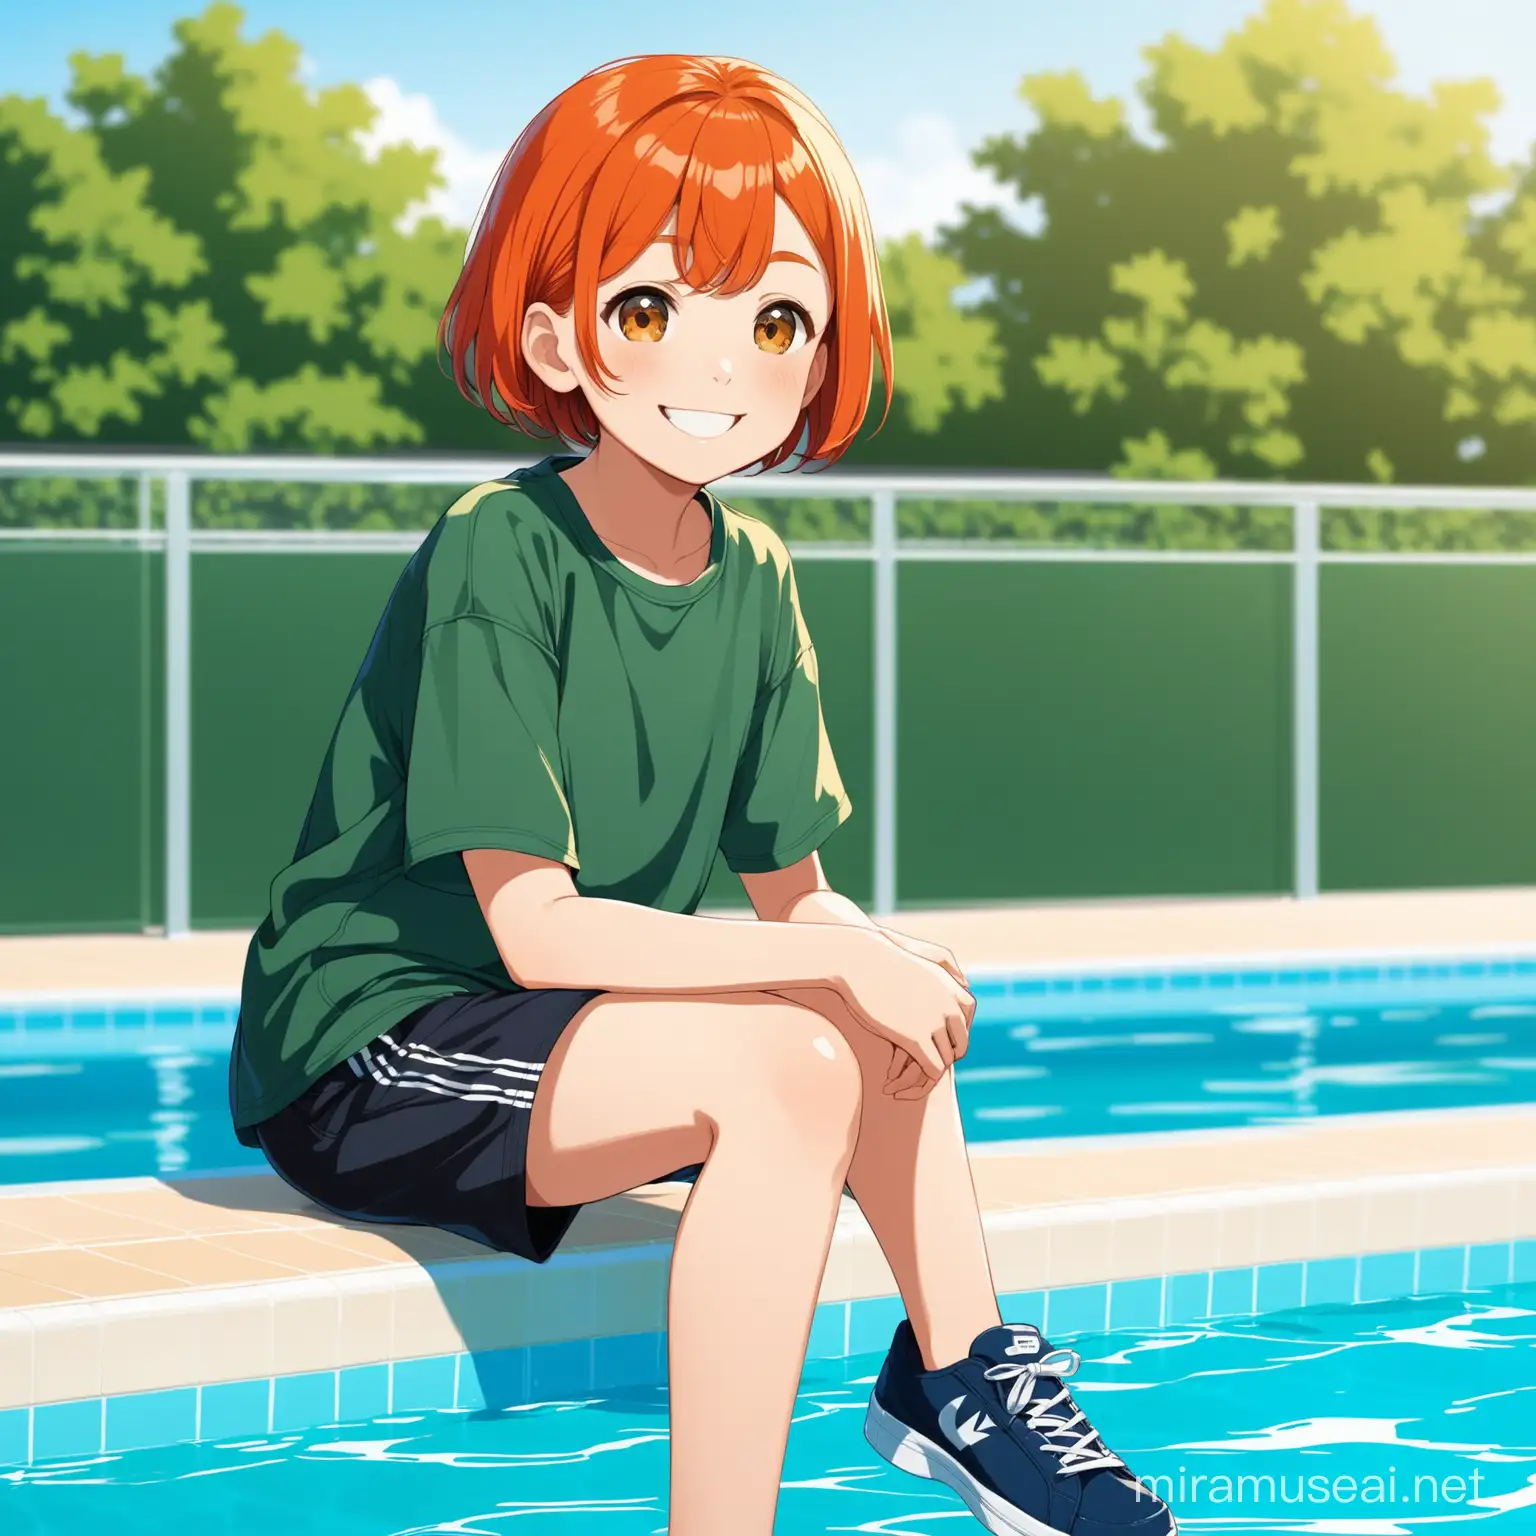 11 year old girl, orange red short hair, baggy dark green shirt, black shorts, navy sneakers, brown eyes, smiling, swimming pool background,   